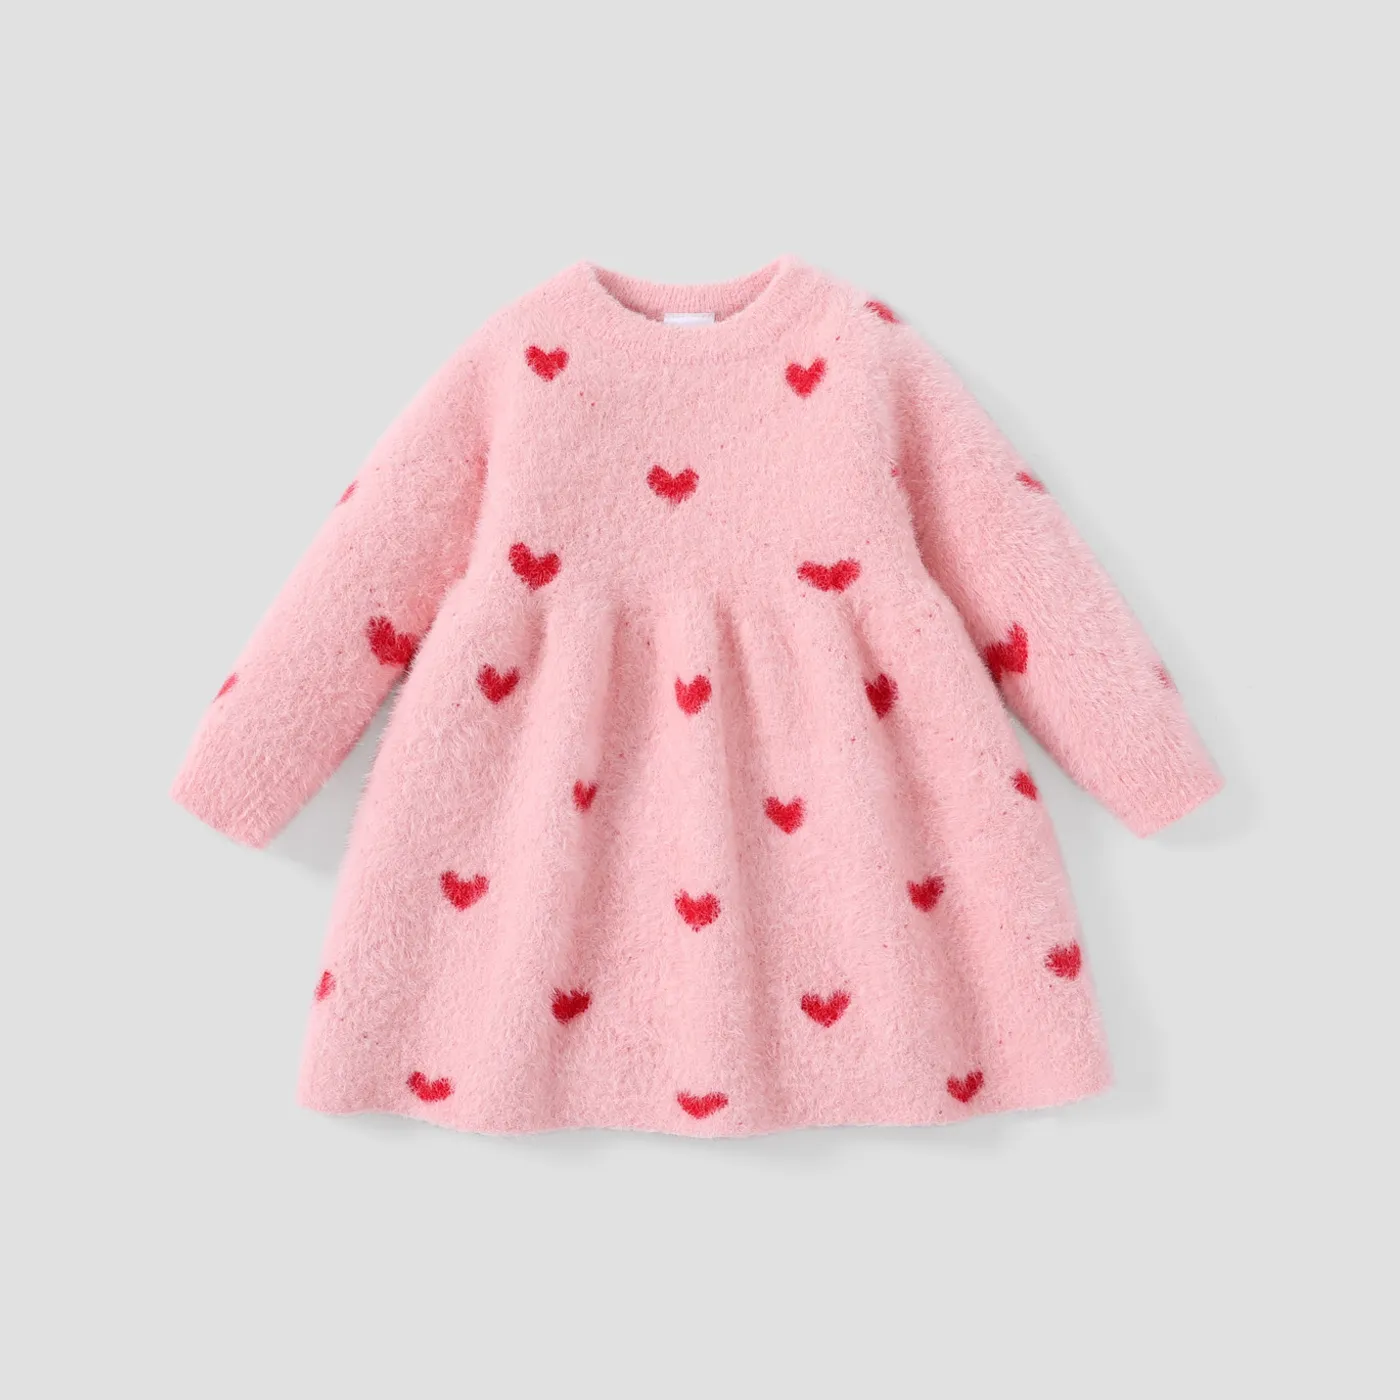 Baby/Toddler Girl Sweet Heart-shaped Sweater Dress